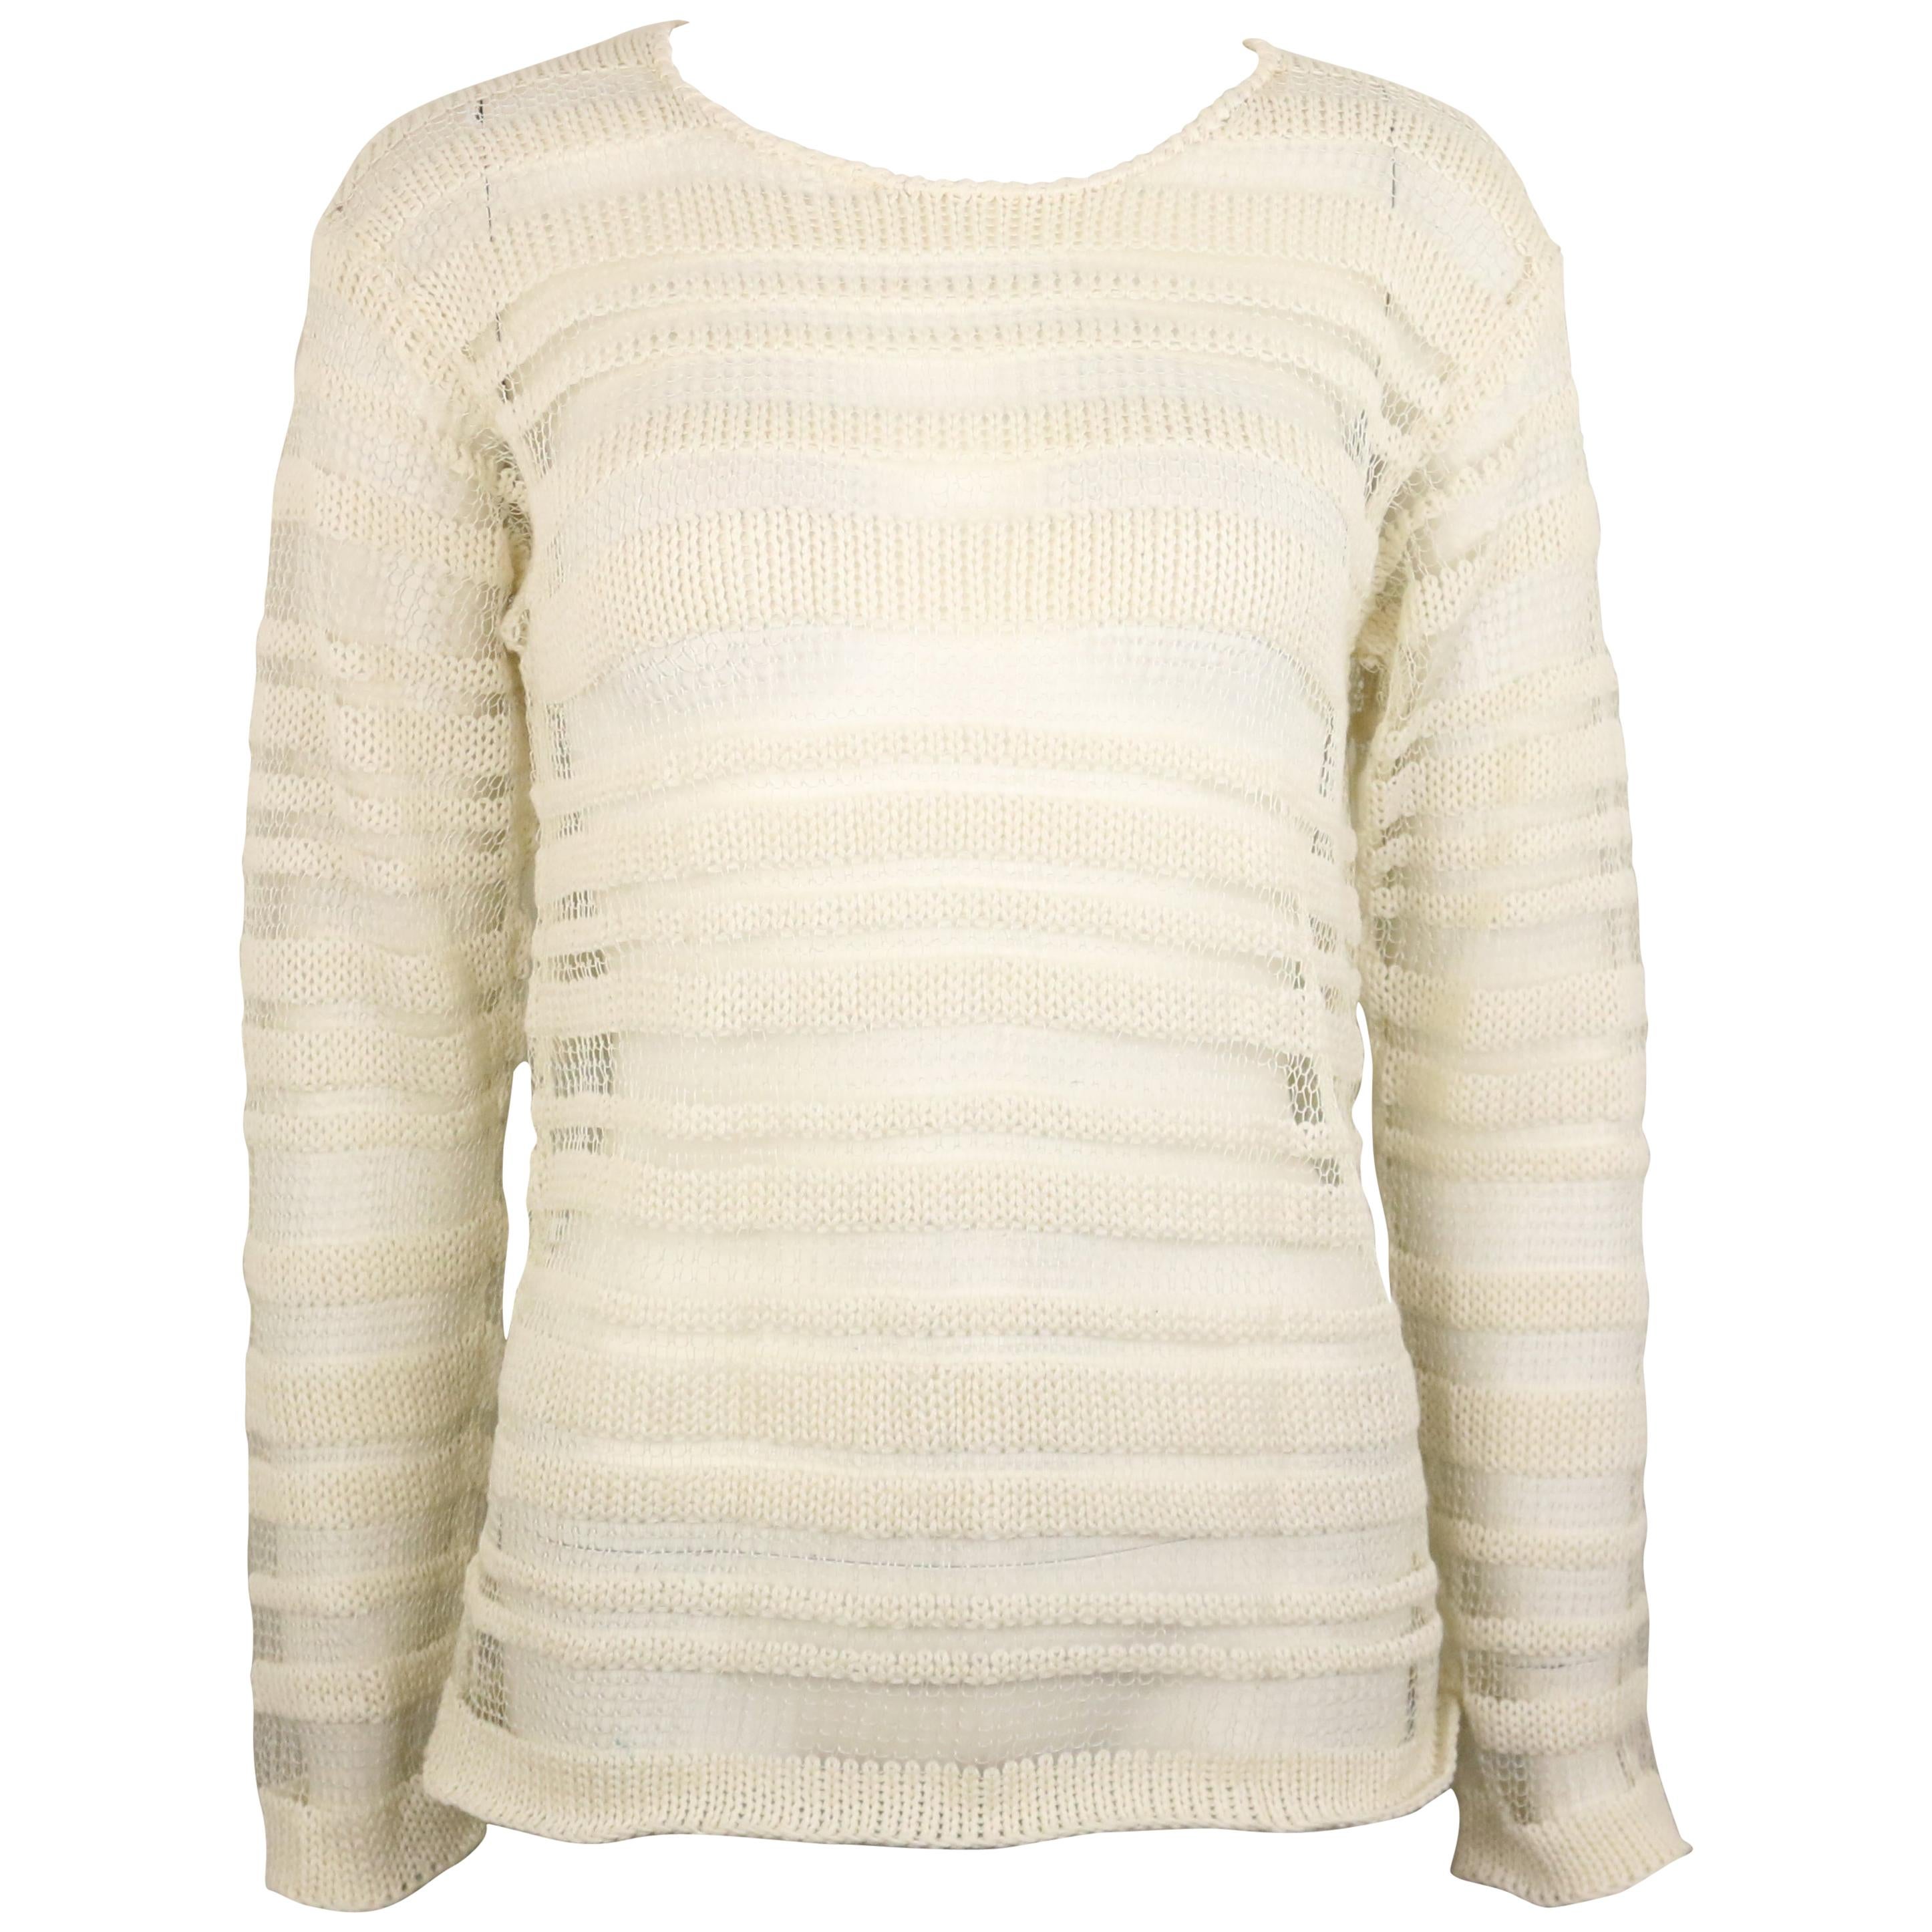 Louis Vuitton Damier Crew Neck White Sweater Size S/M 1a5vnl Rare